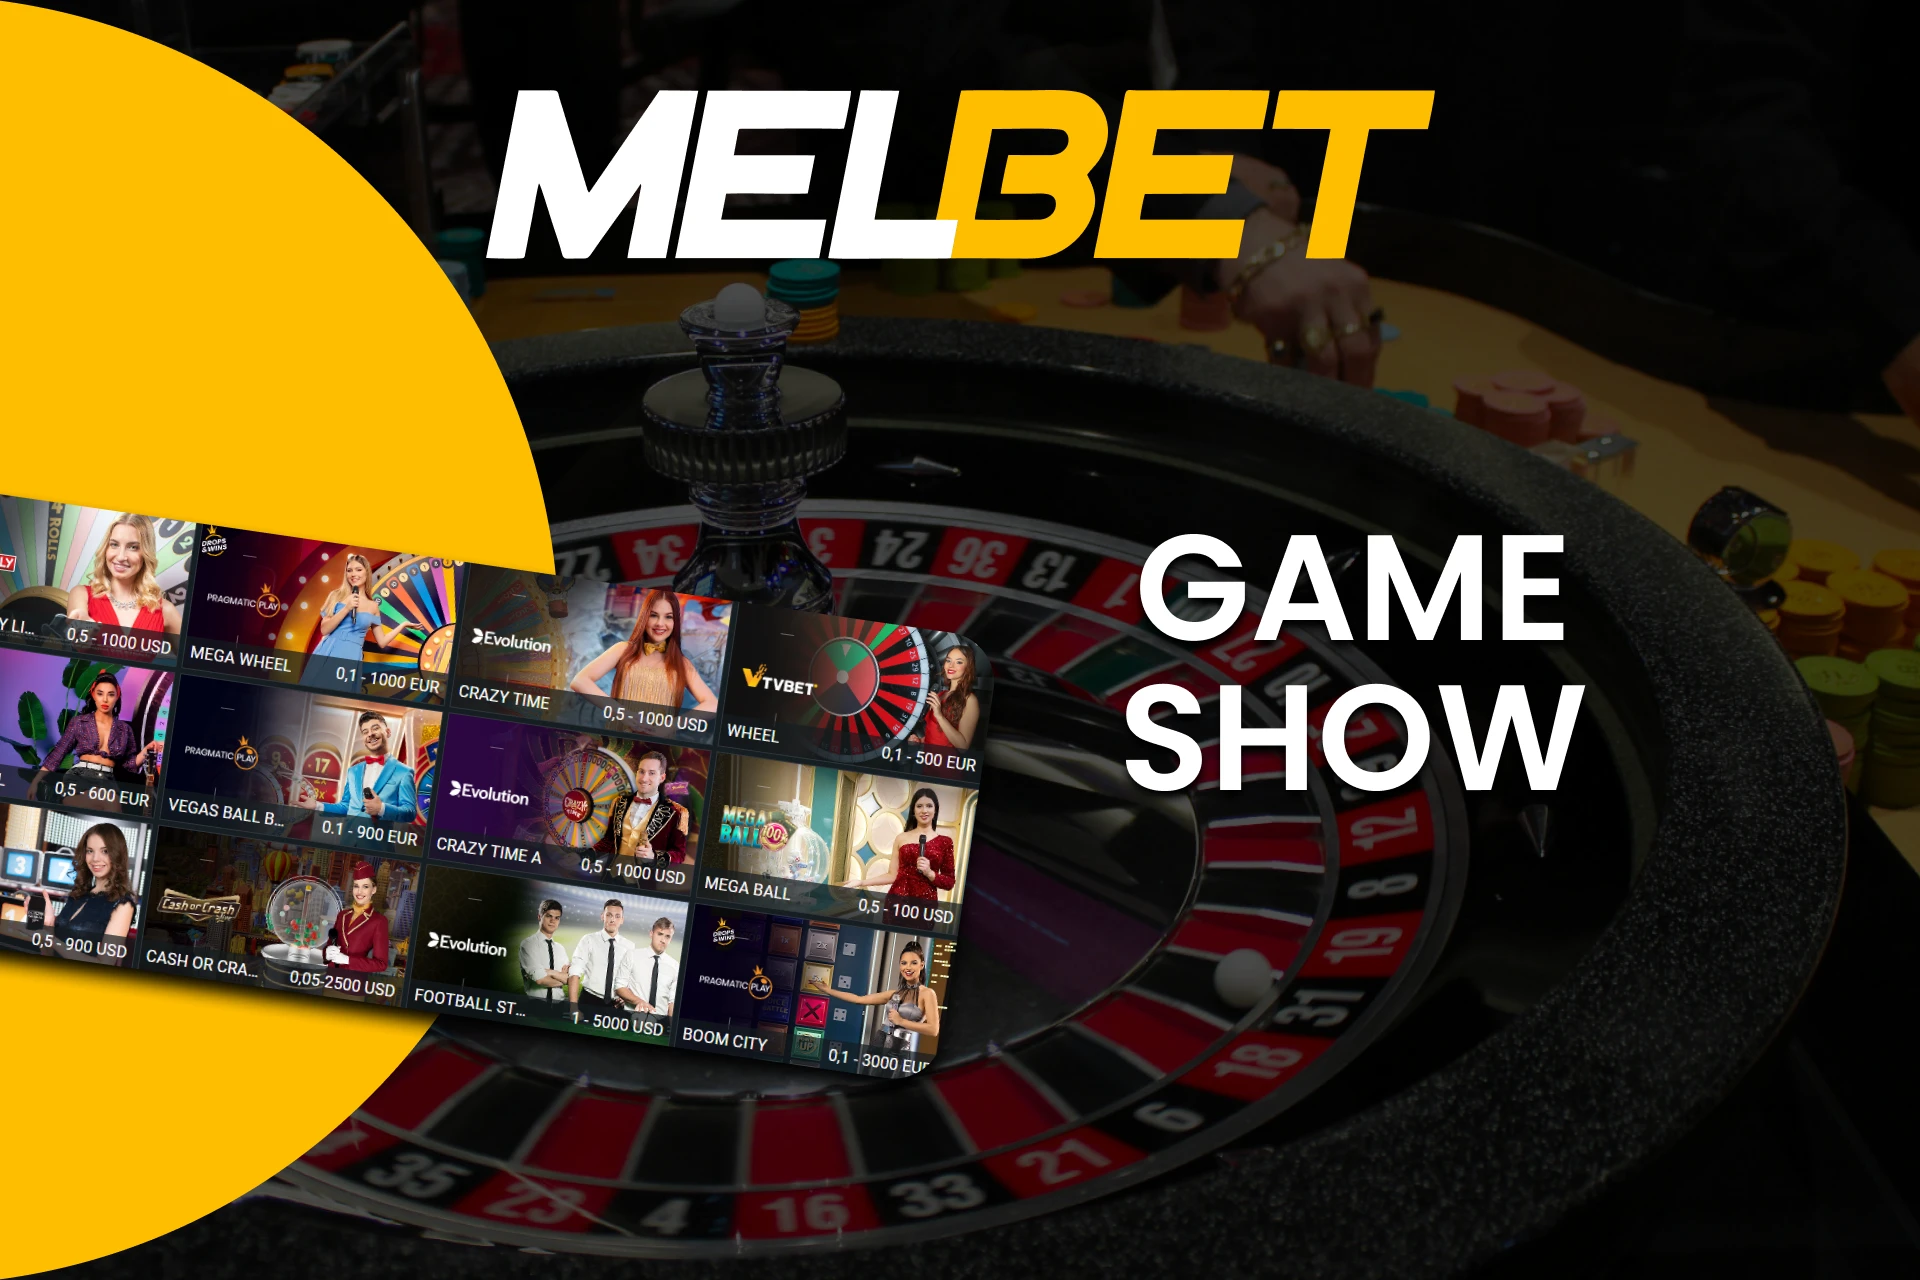 For Melbet Live Casino games, choose Game Show.